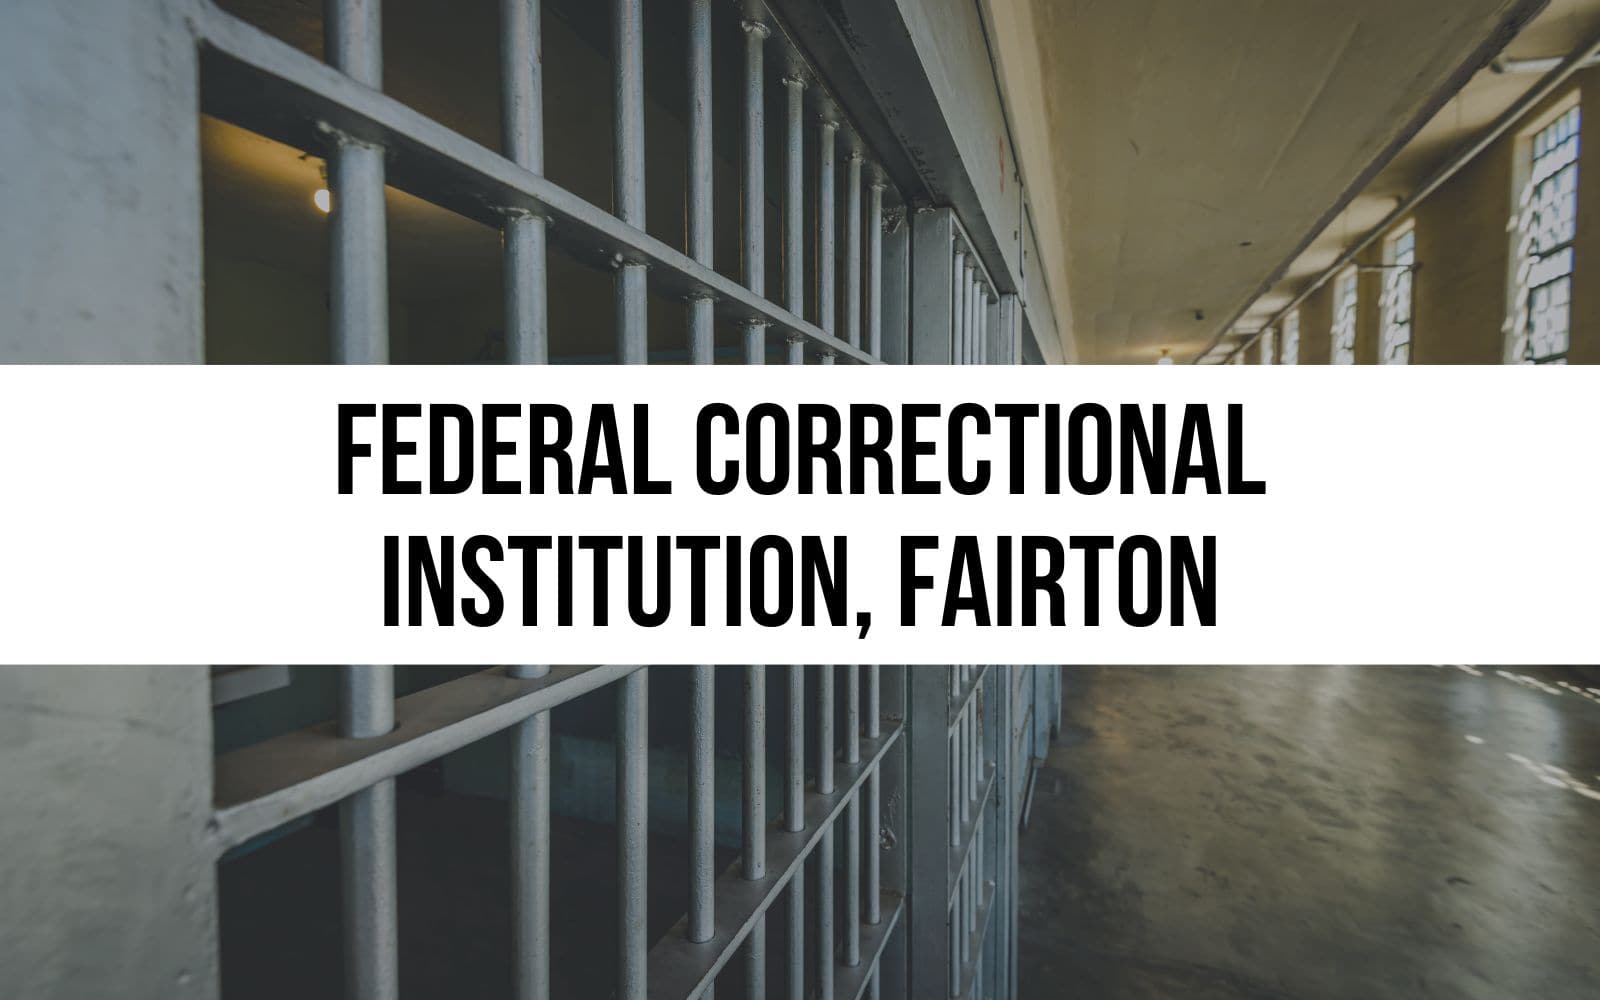 Federal Correctional Institution, Fairton